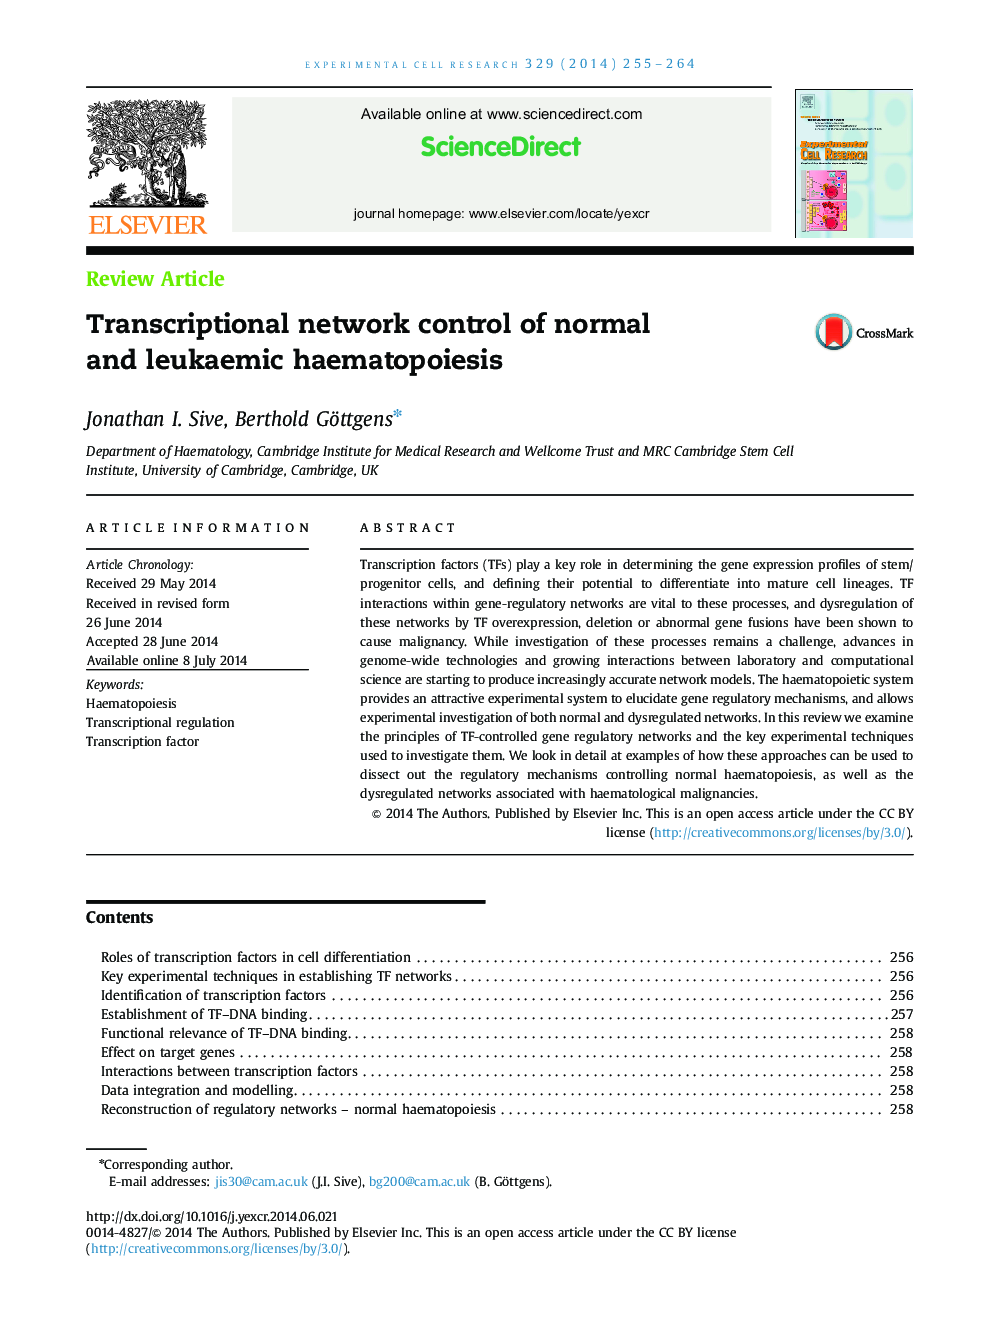 Transcriptional network control of normal and leukaemic haematopoiesis